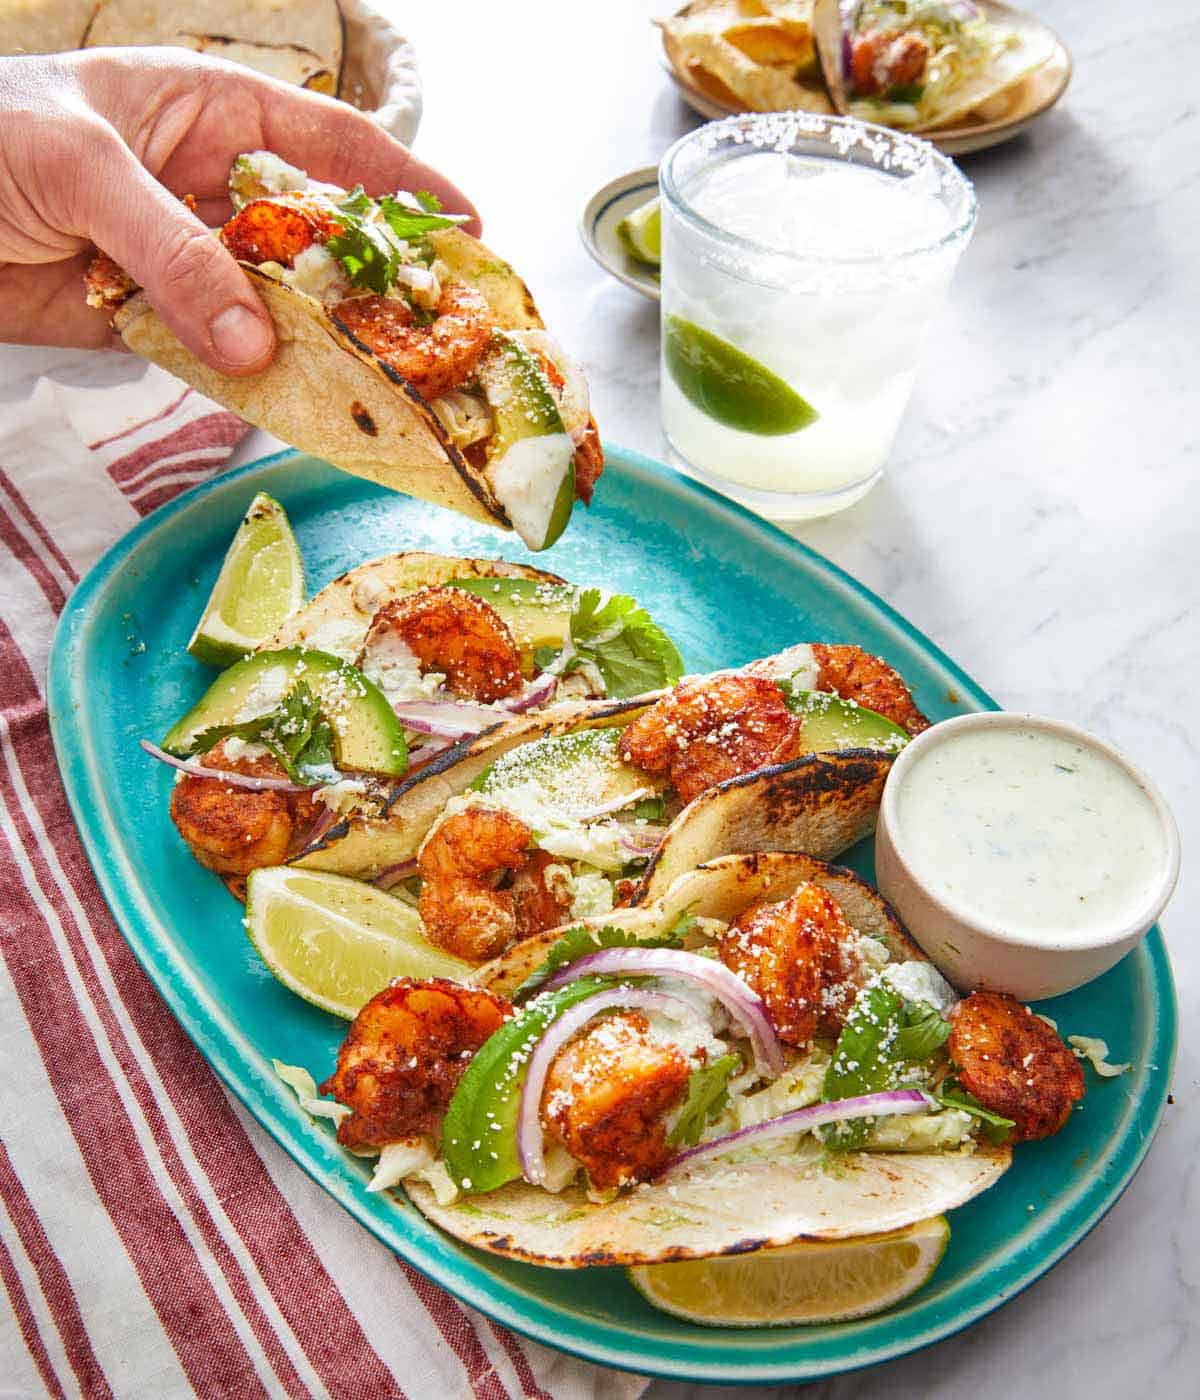 A hand lifting a shrimp taco off a platter with three more shrimp tacos with a small bowl of dip.